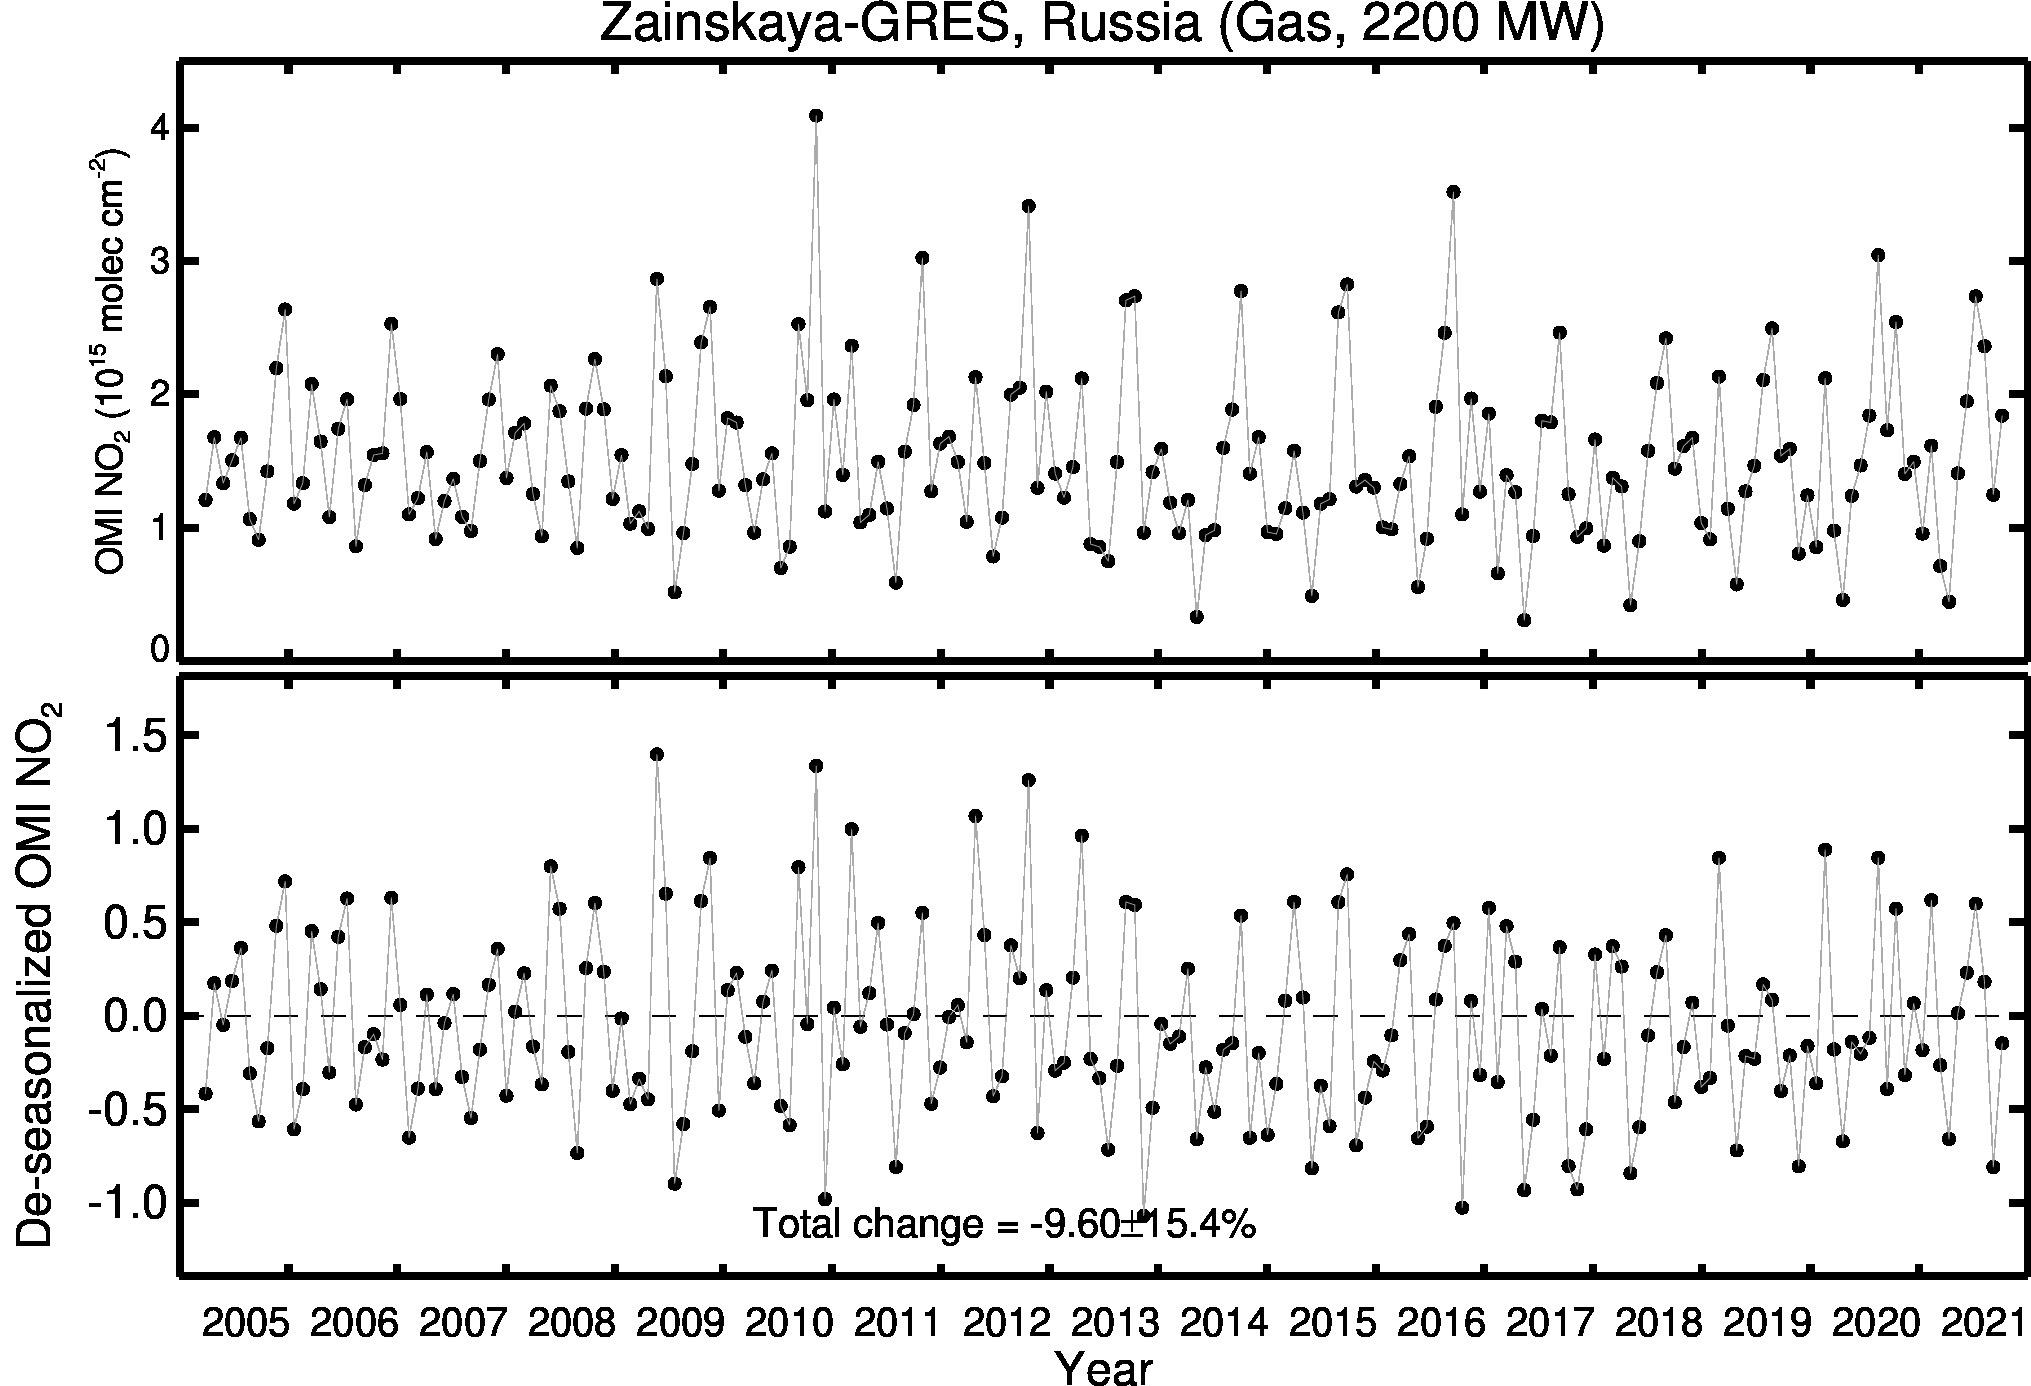 Zainskaya GRES Line Plot 2005-2021